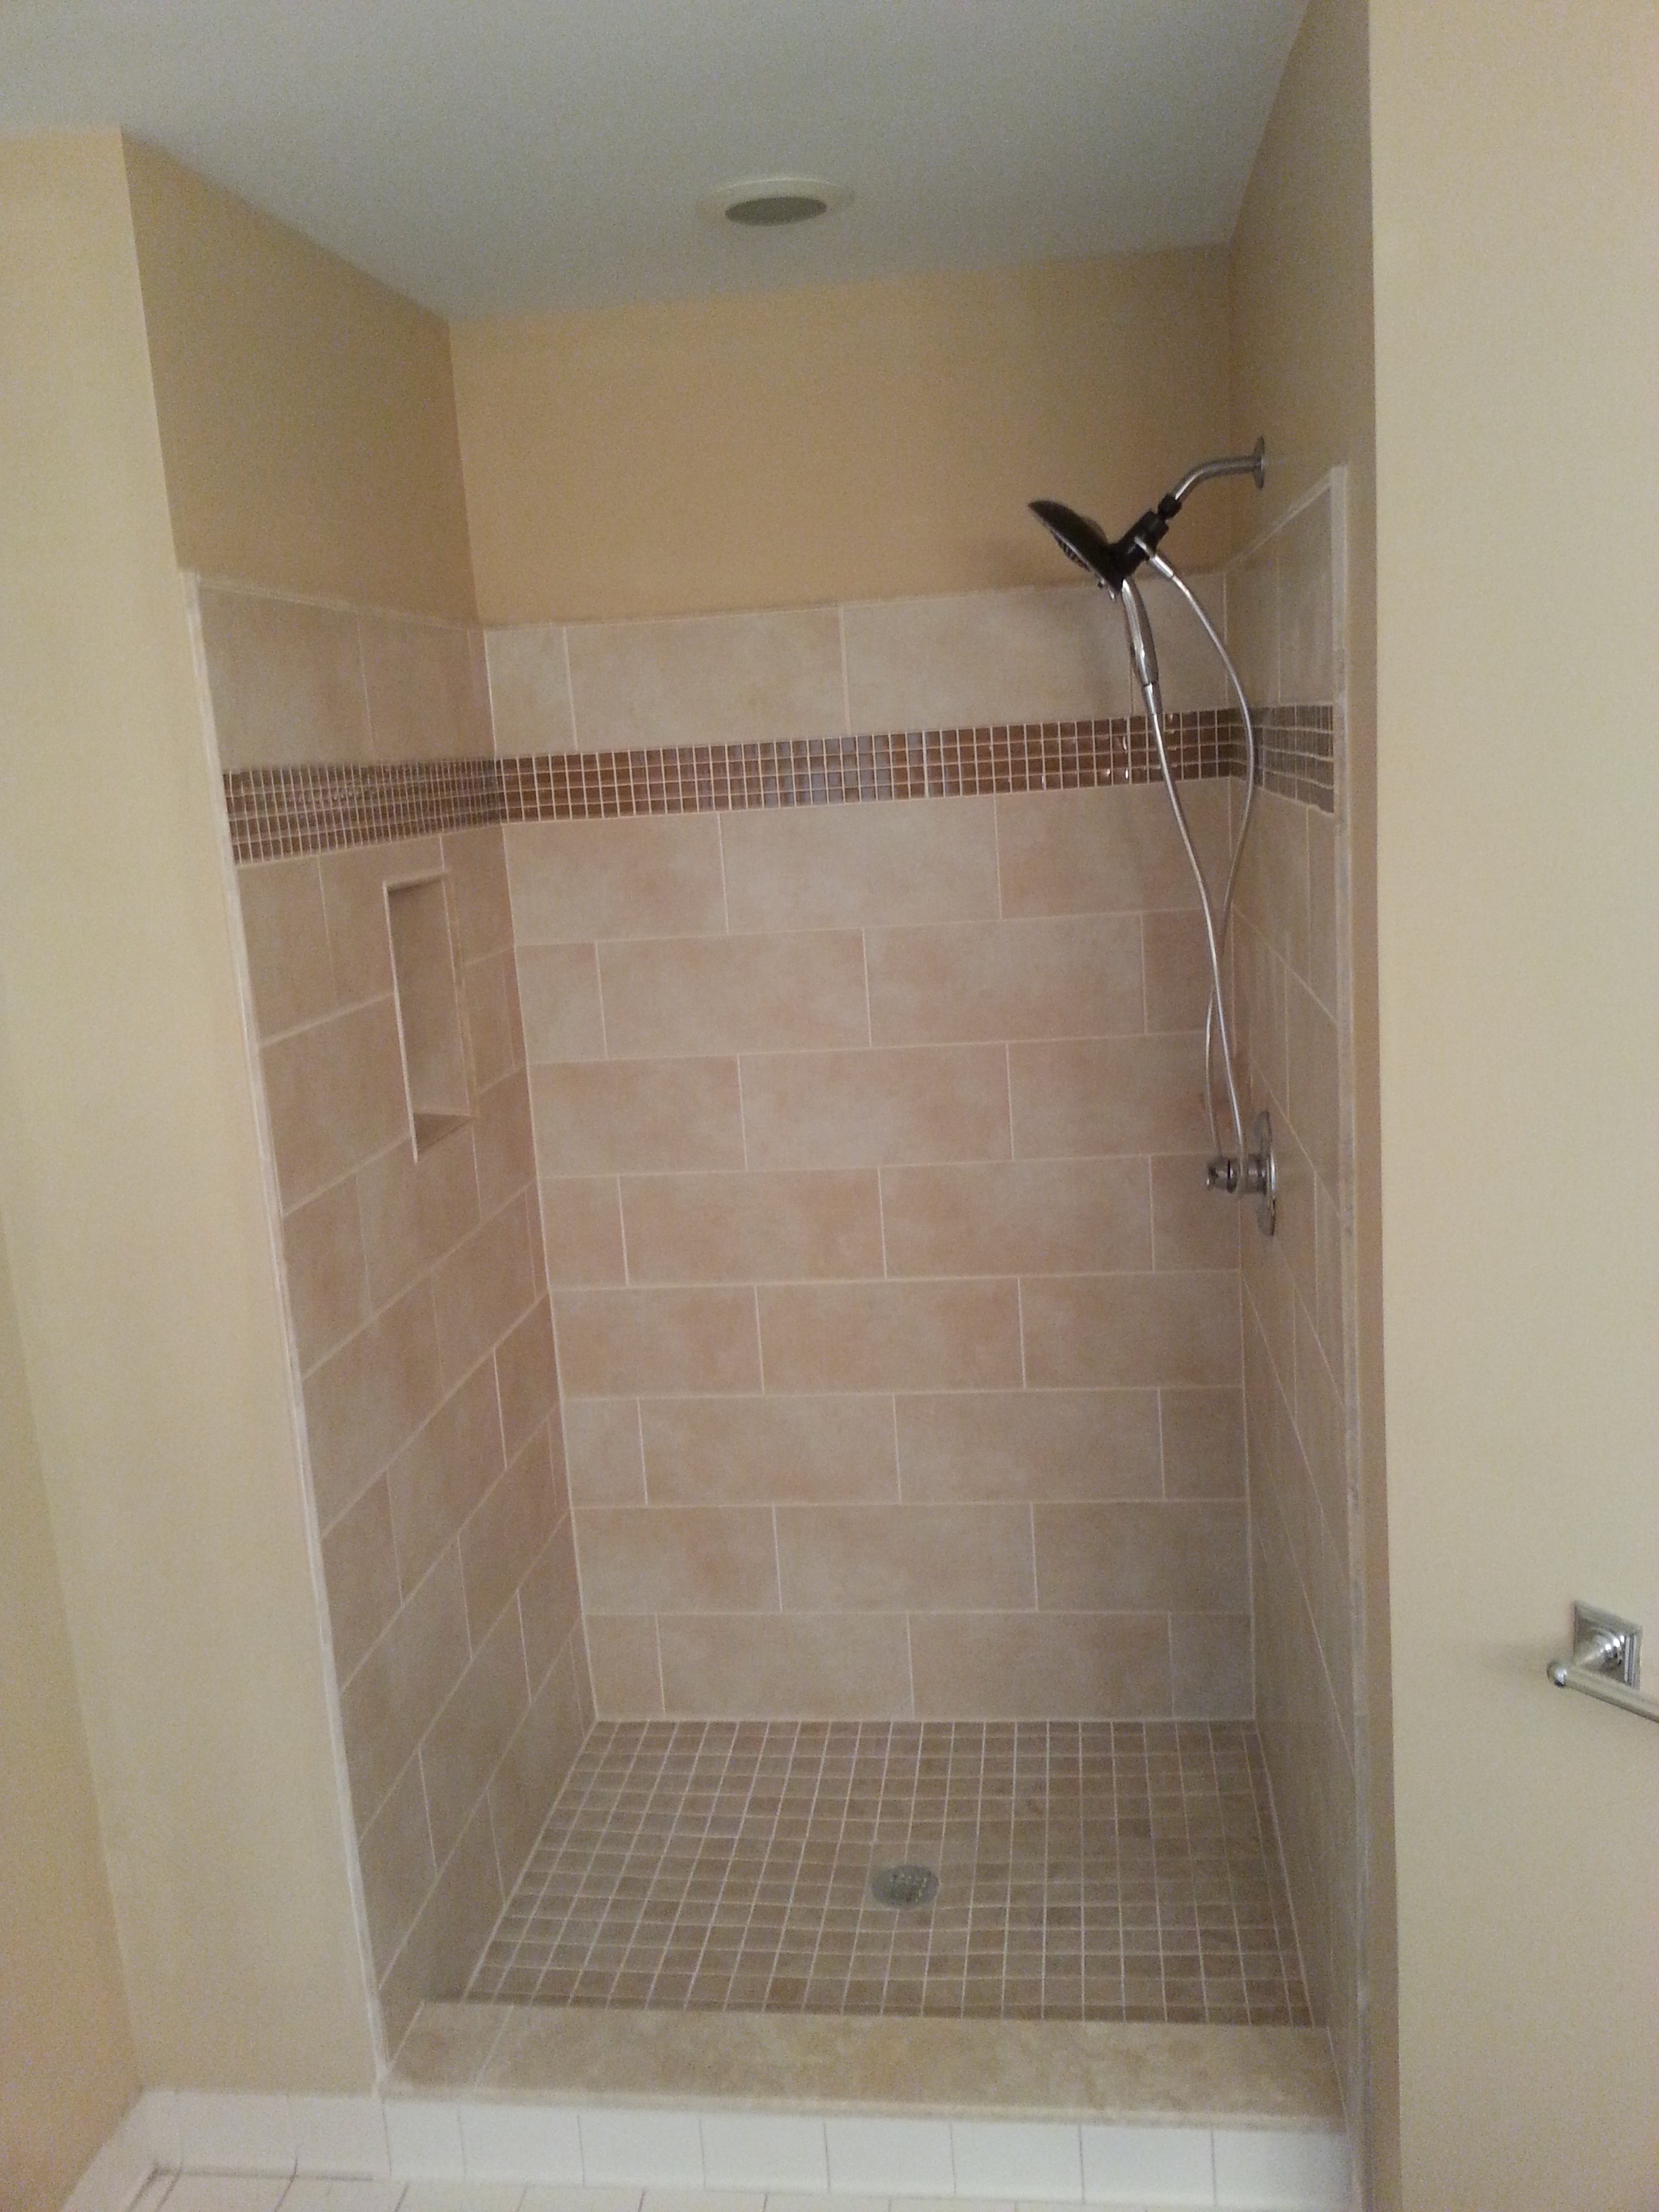 Shower Ceiling Tile Or Drywall